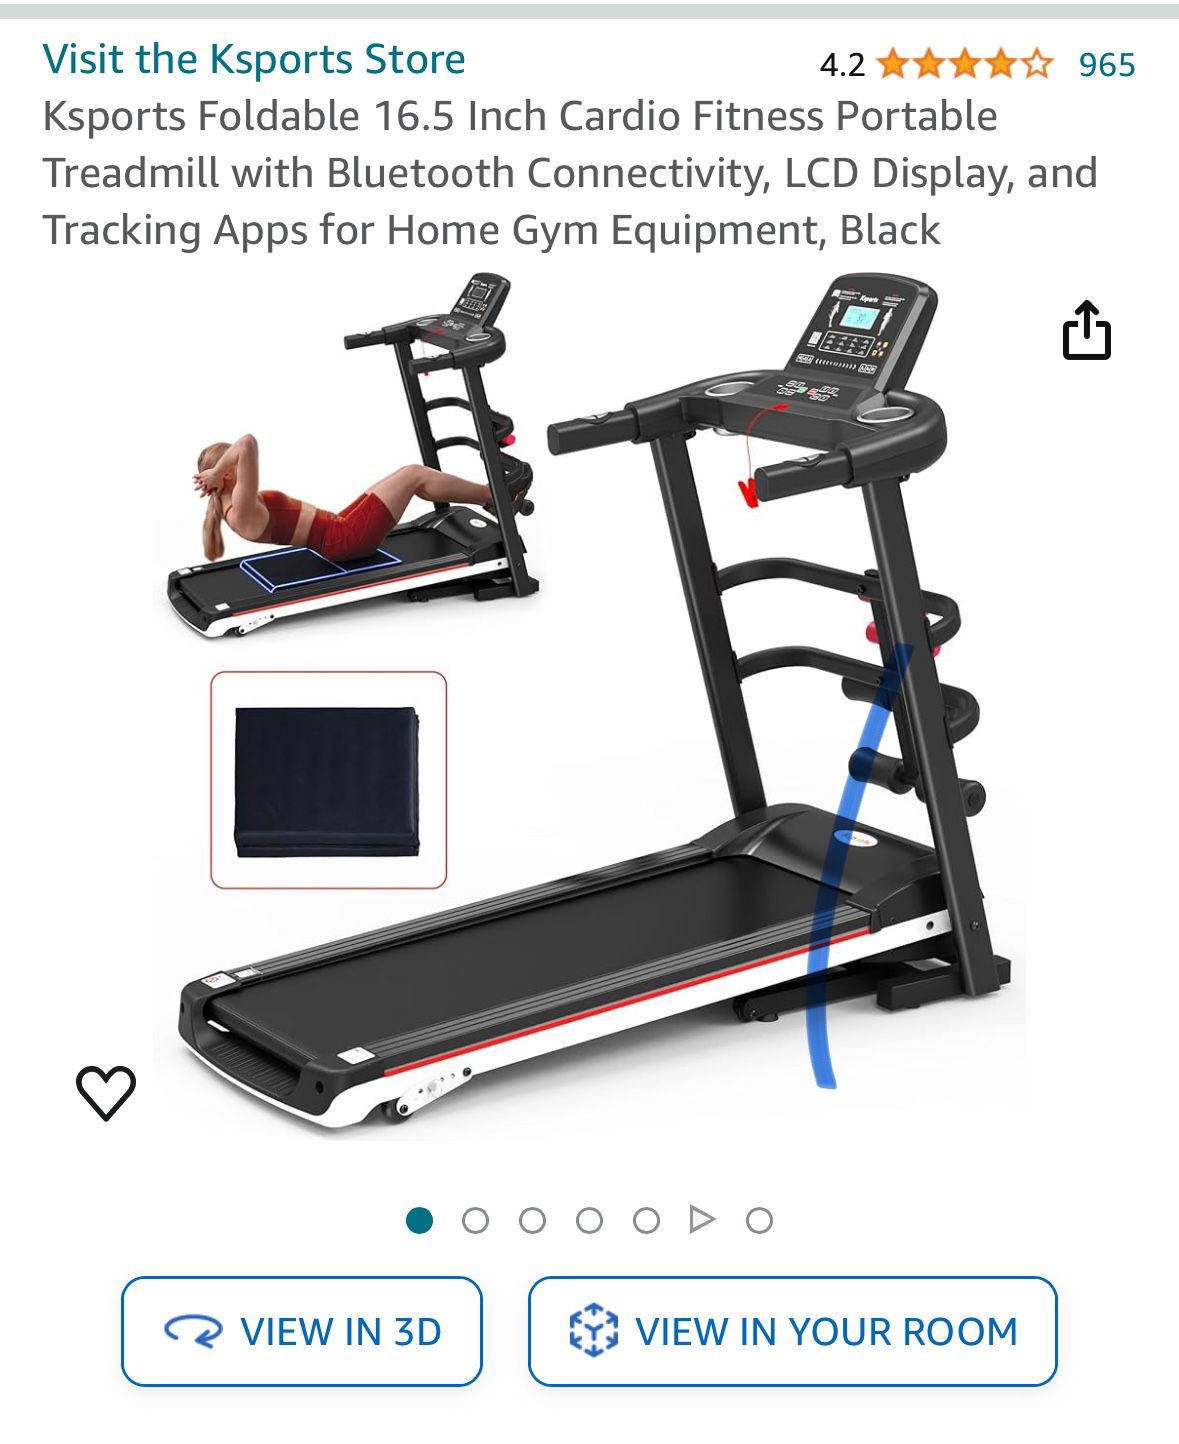 Ksports Foldable 16.5 Inch Cardio Fitness Portable Treadmill 